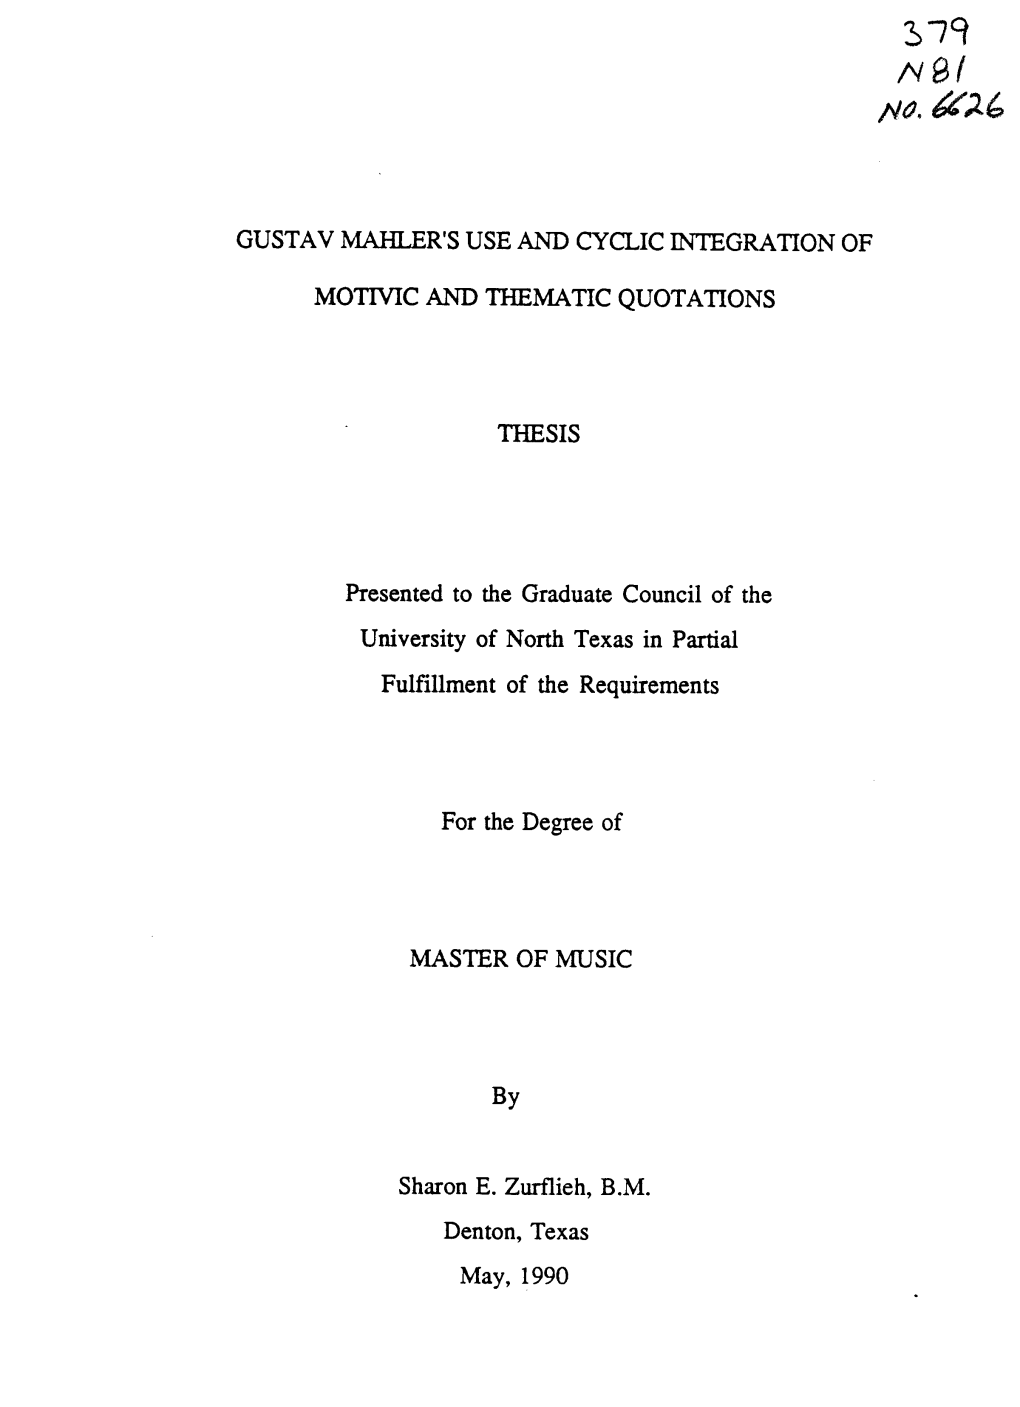 Gustav Marler's Use and Cyclic Integration Of